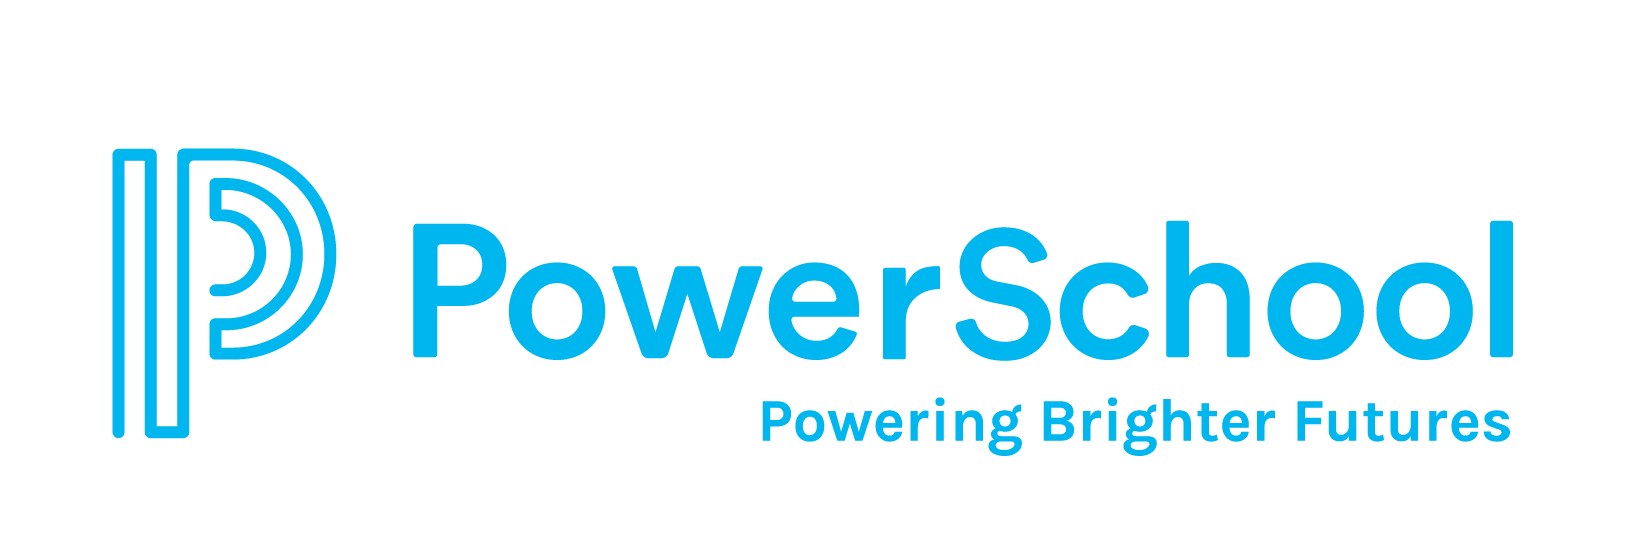 PowerSchool Holdings Inc